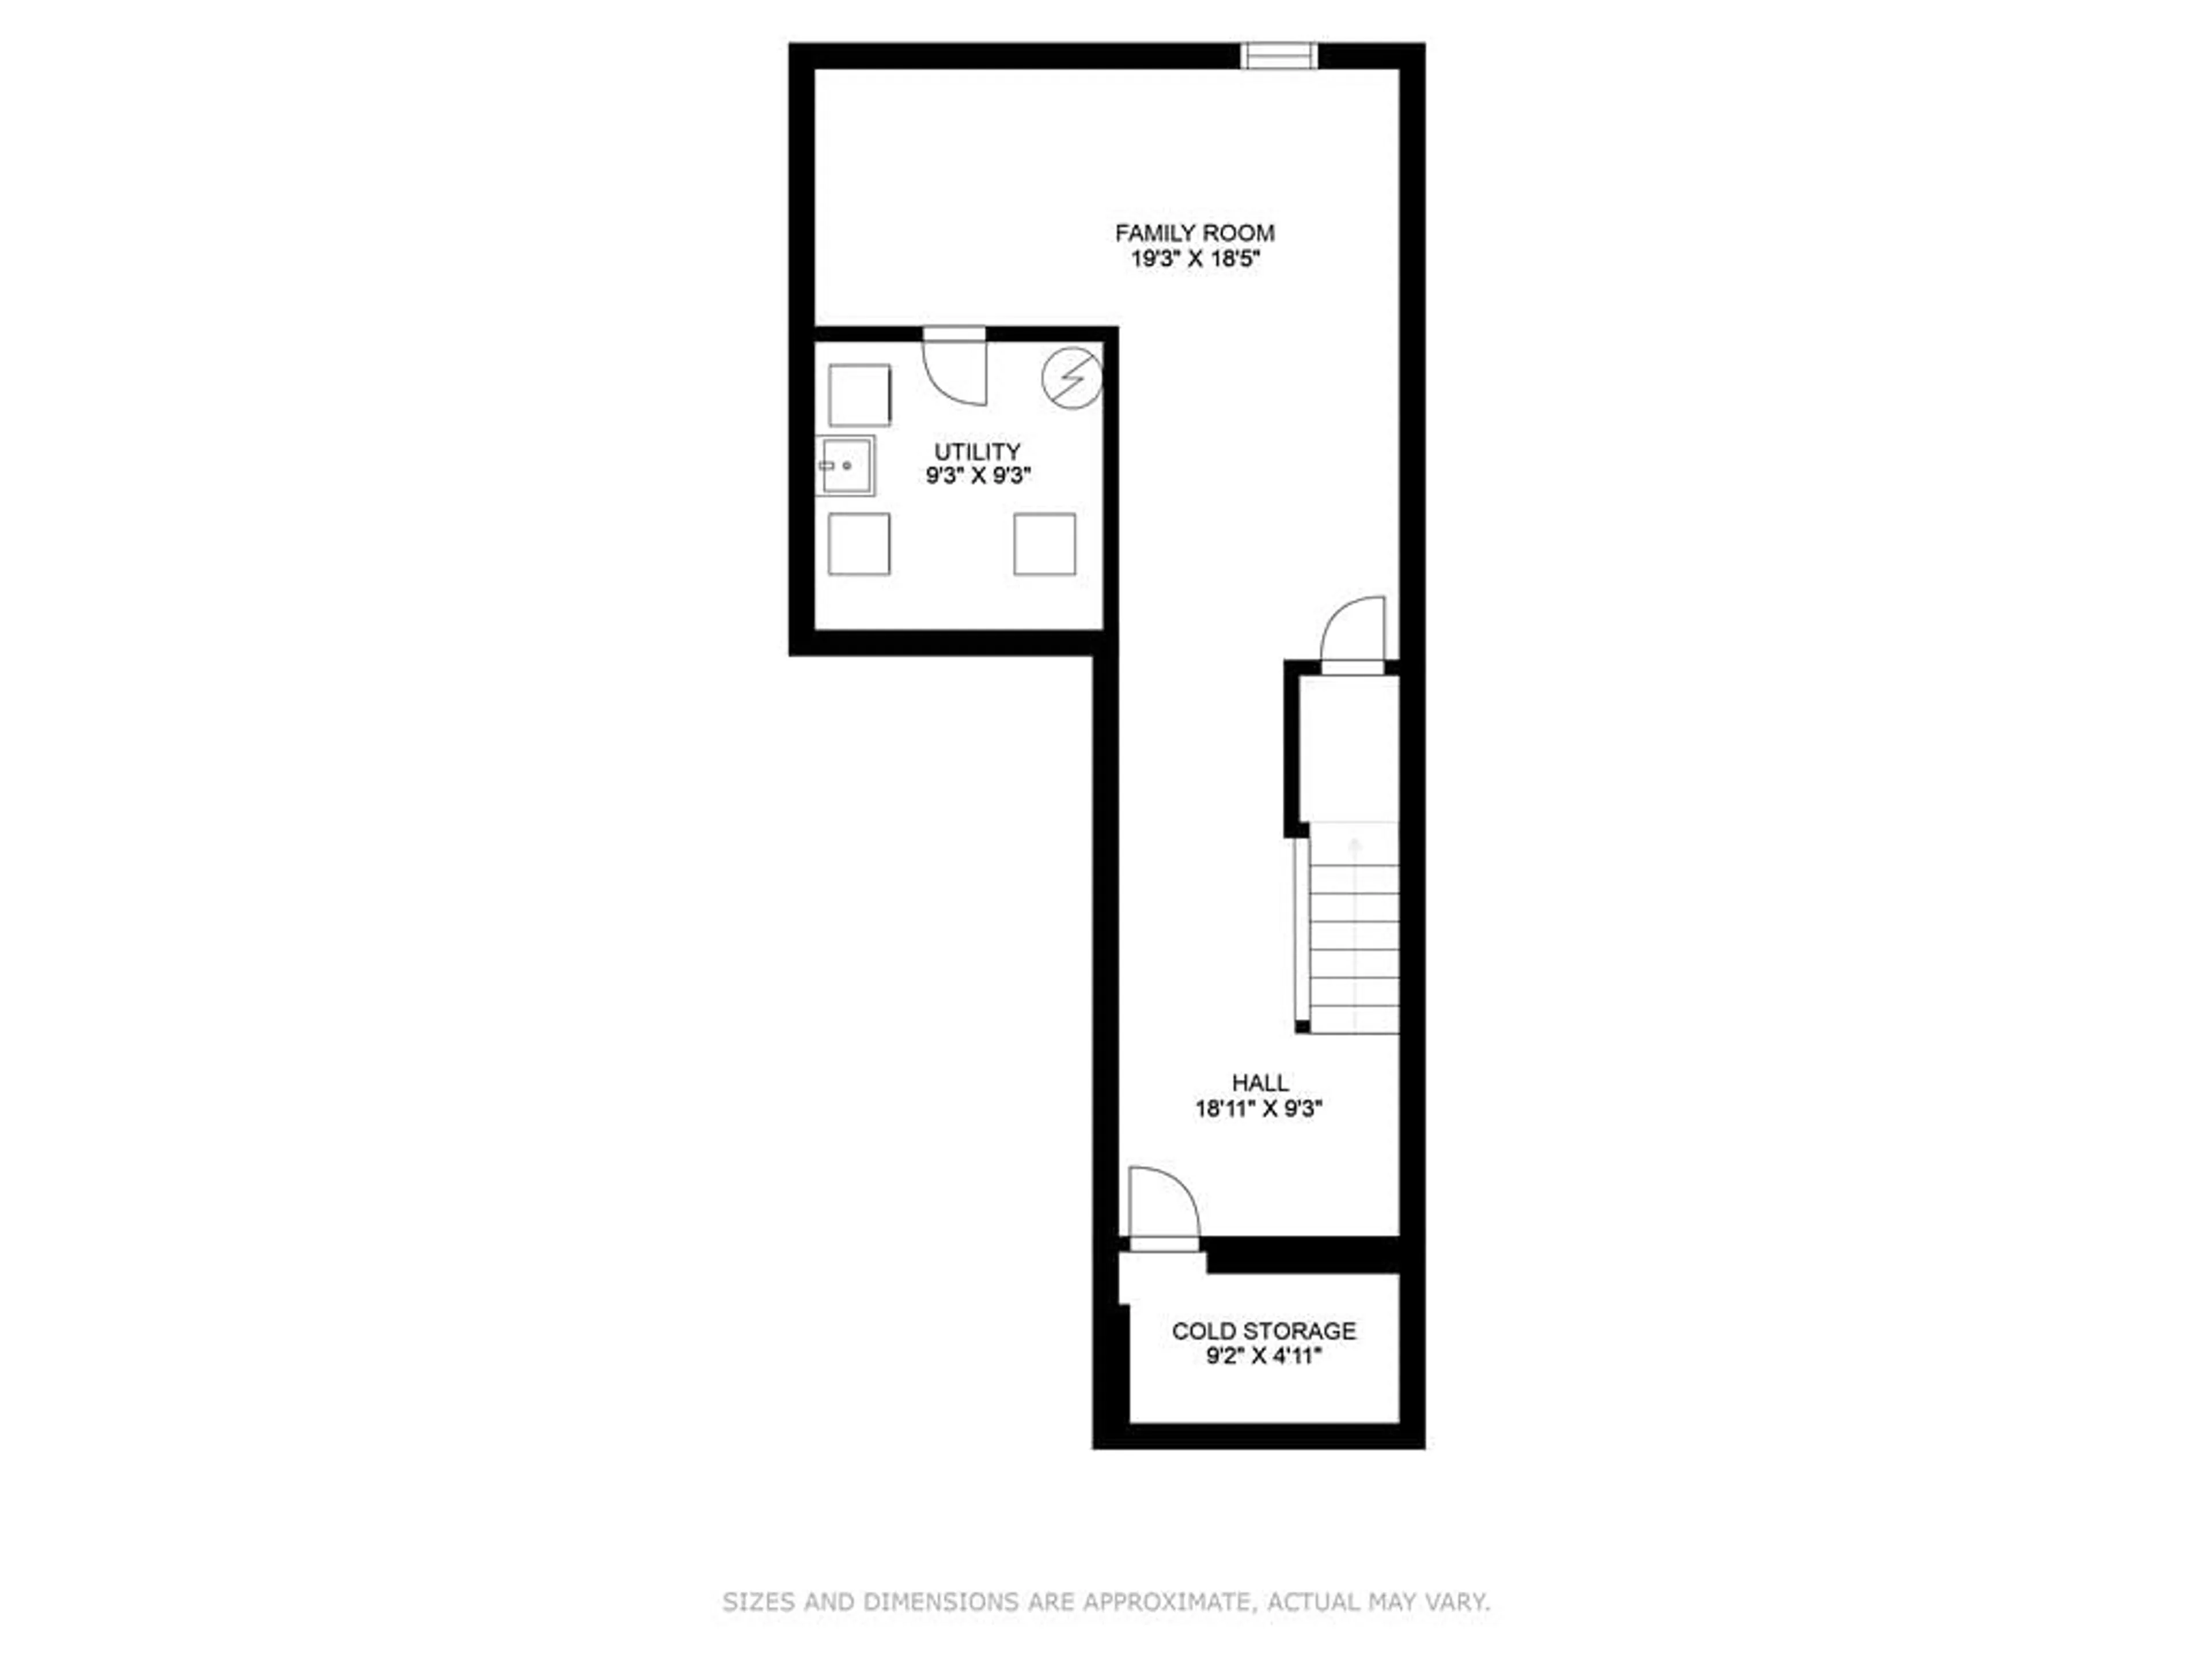 Floor plan for 54 Arrowhead Lane, Grimsby Ontario L3M 5M4